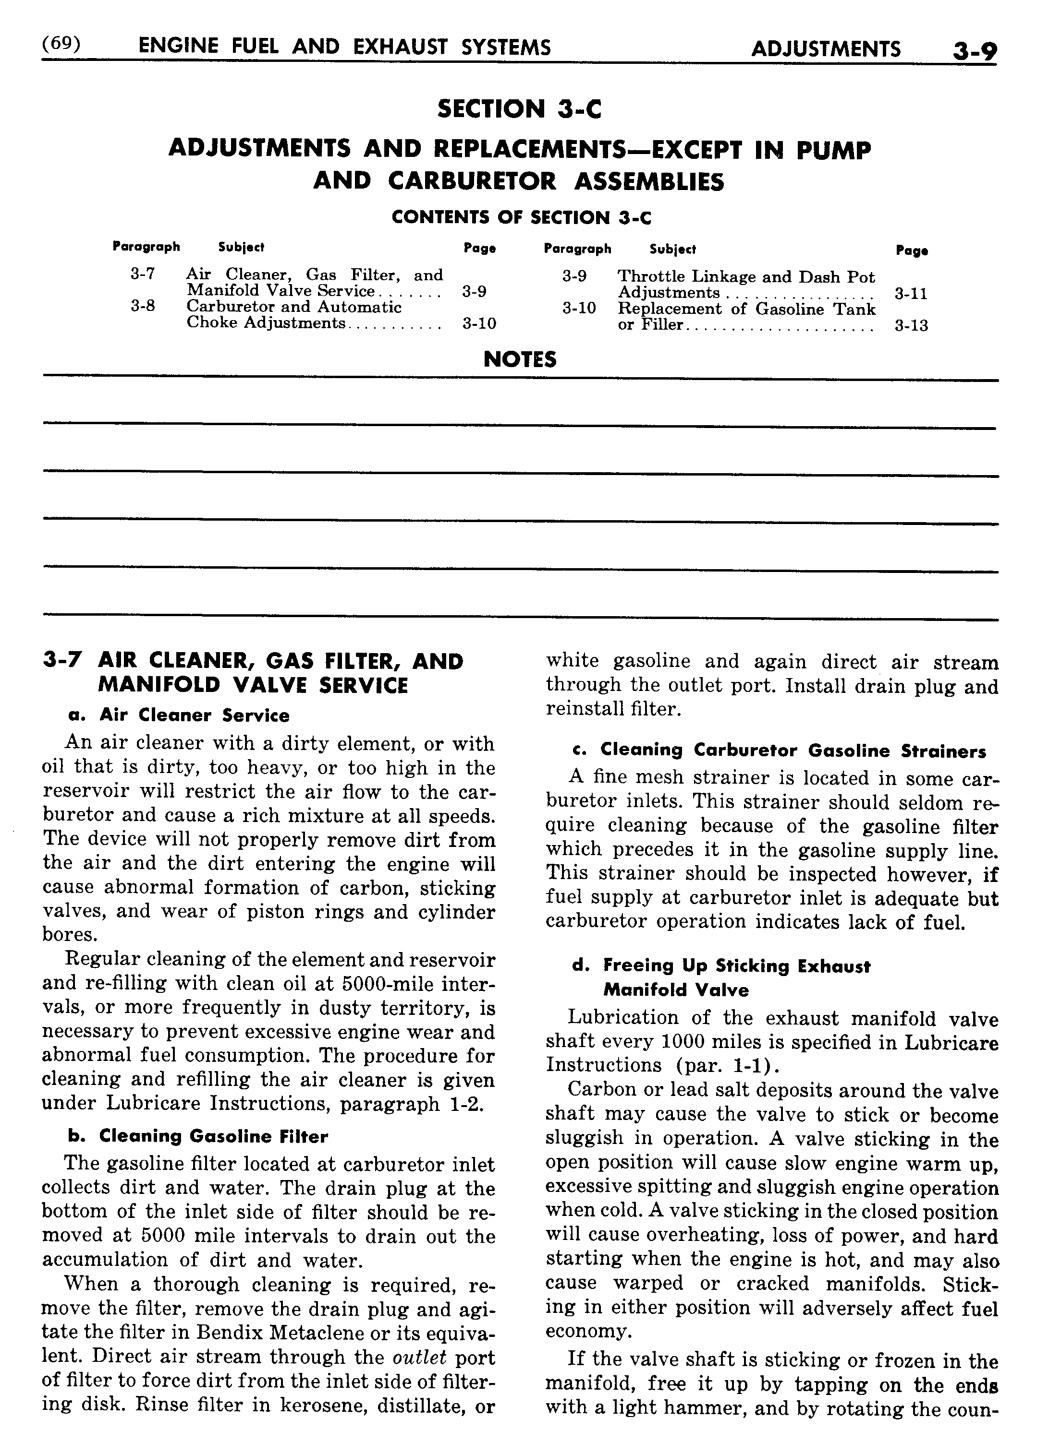 n_04 1956 Buick Shop Manual - Engine Fuel & Exhaust-009-009.jpg